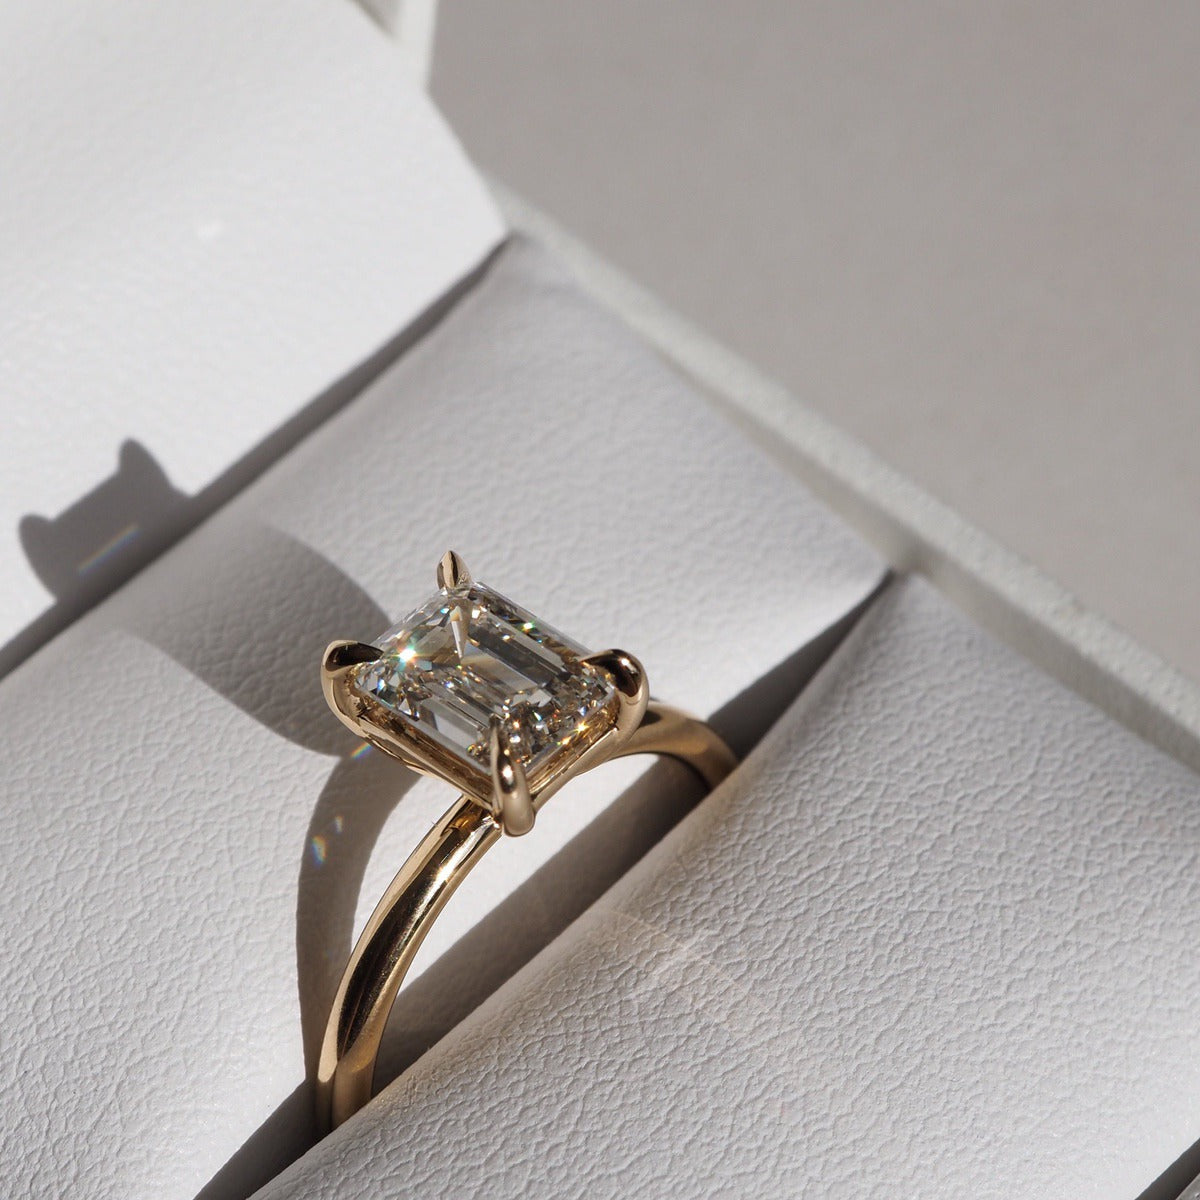 Estate 2.31 Carat Emerald-Cut Diamond Engagement Ring - GIA